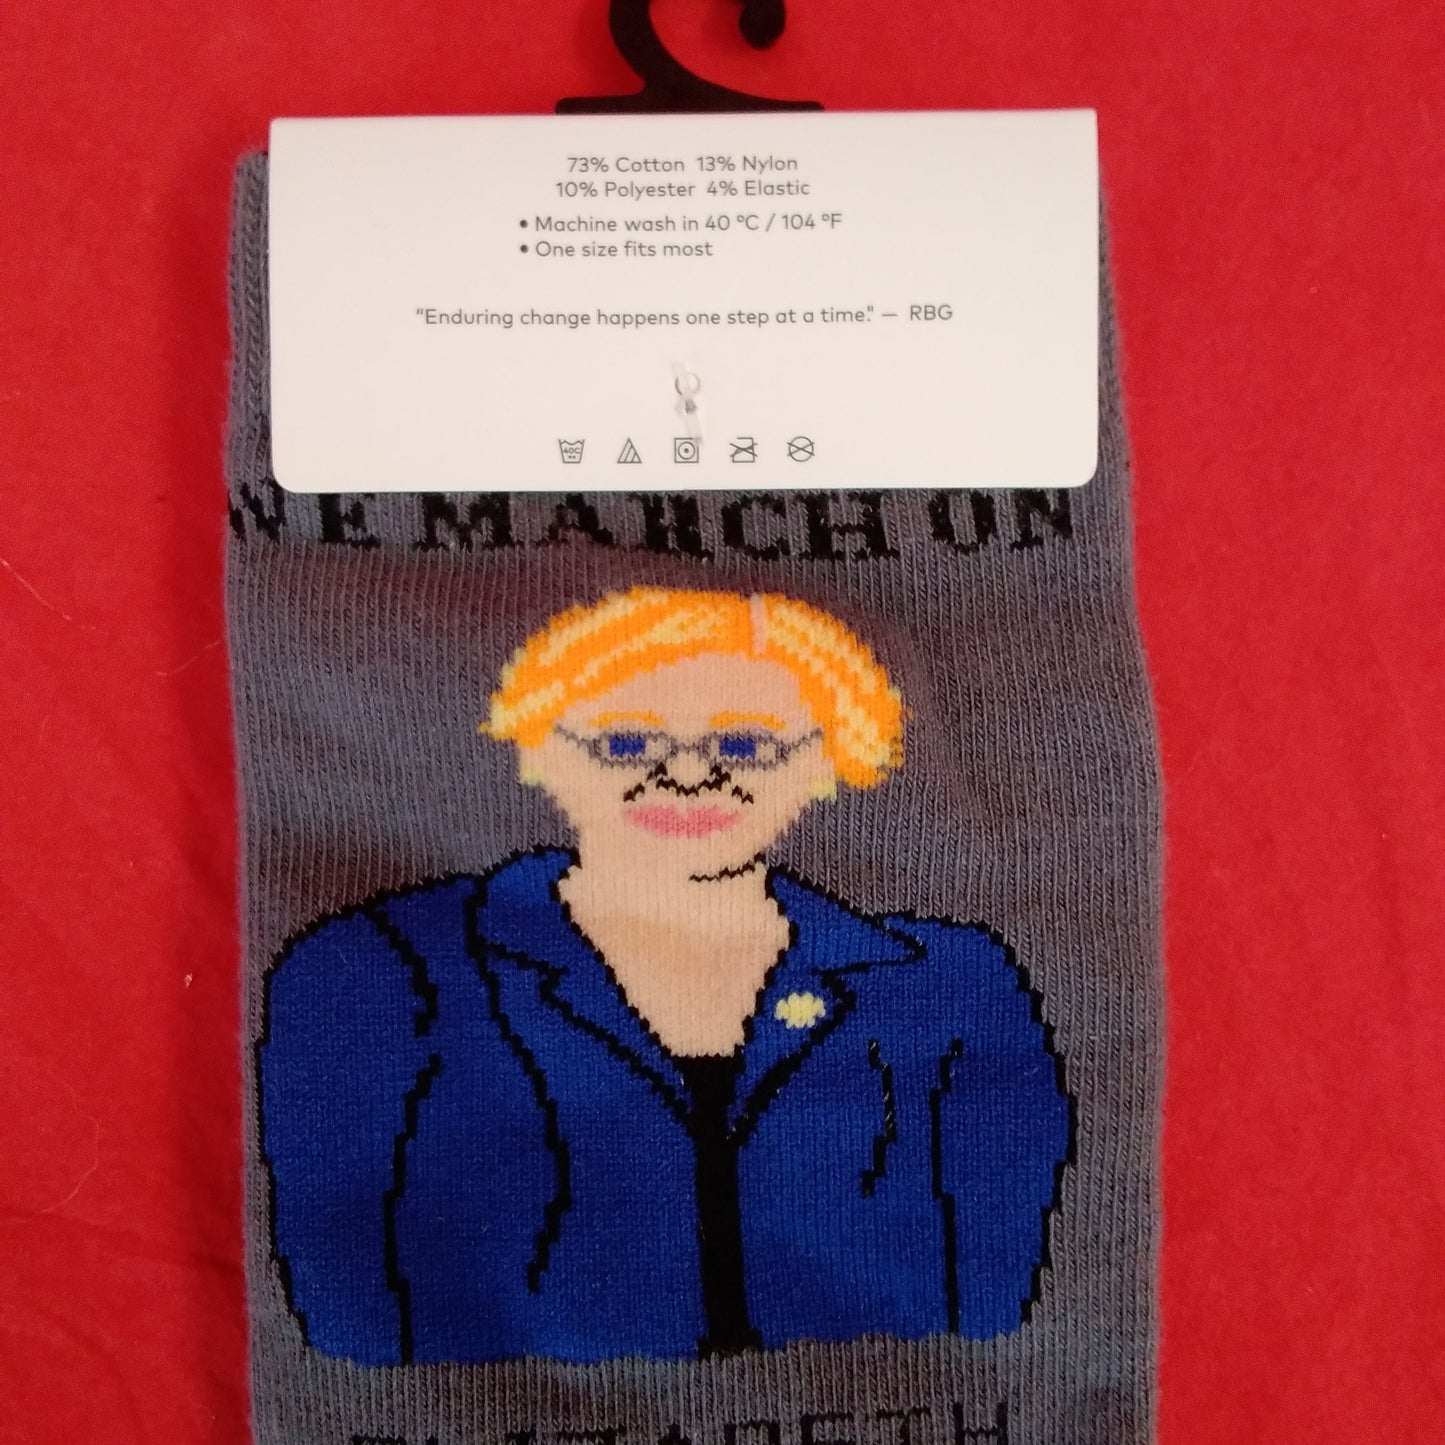 NWT - "Elizabeth Warren" Gray Crew Socks by Maggie Stern Stitches